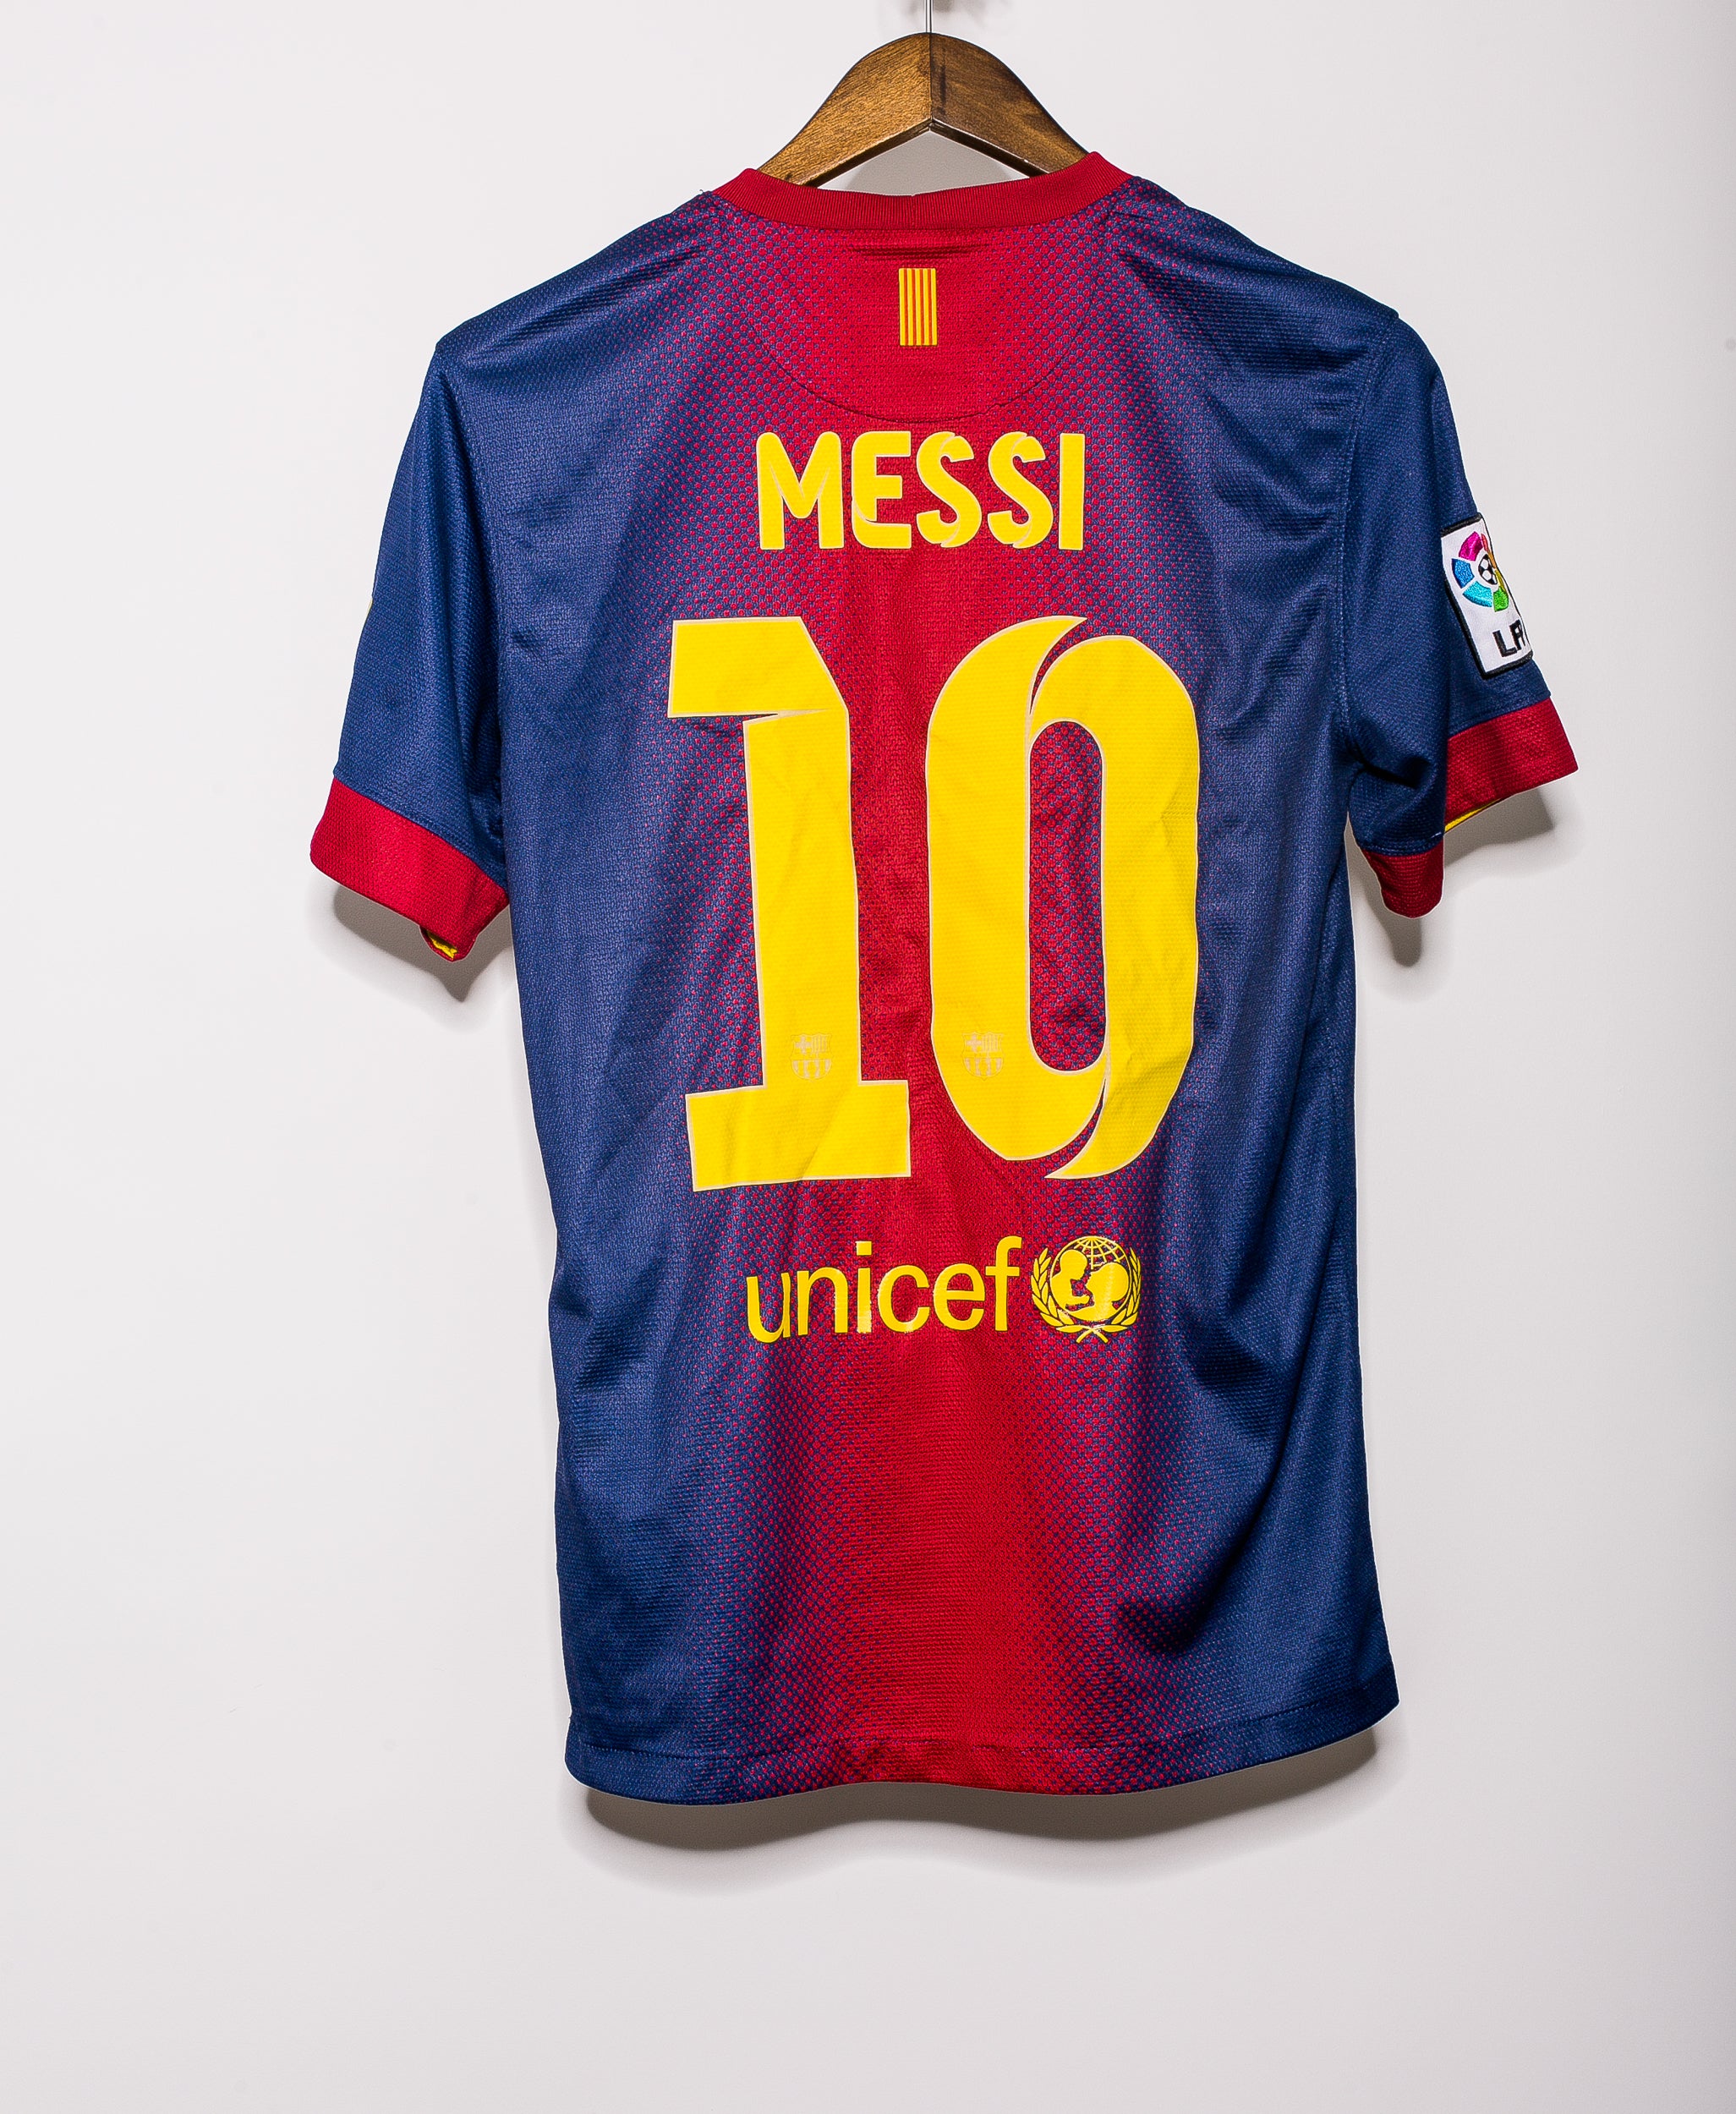 barcelona 2012 kit